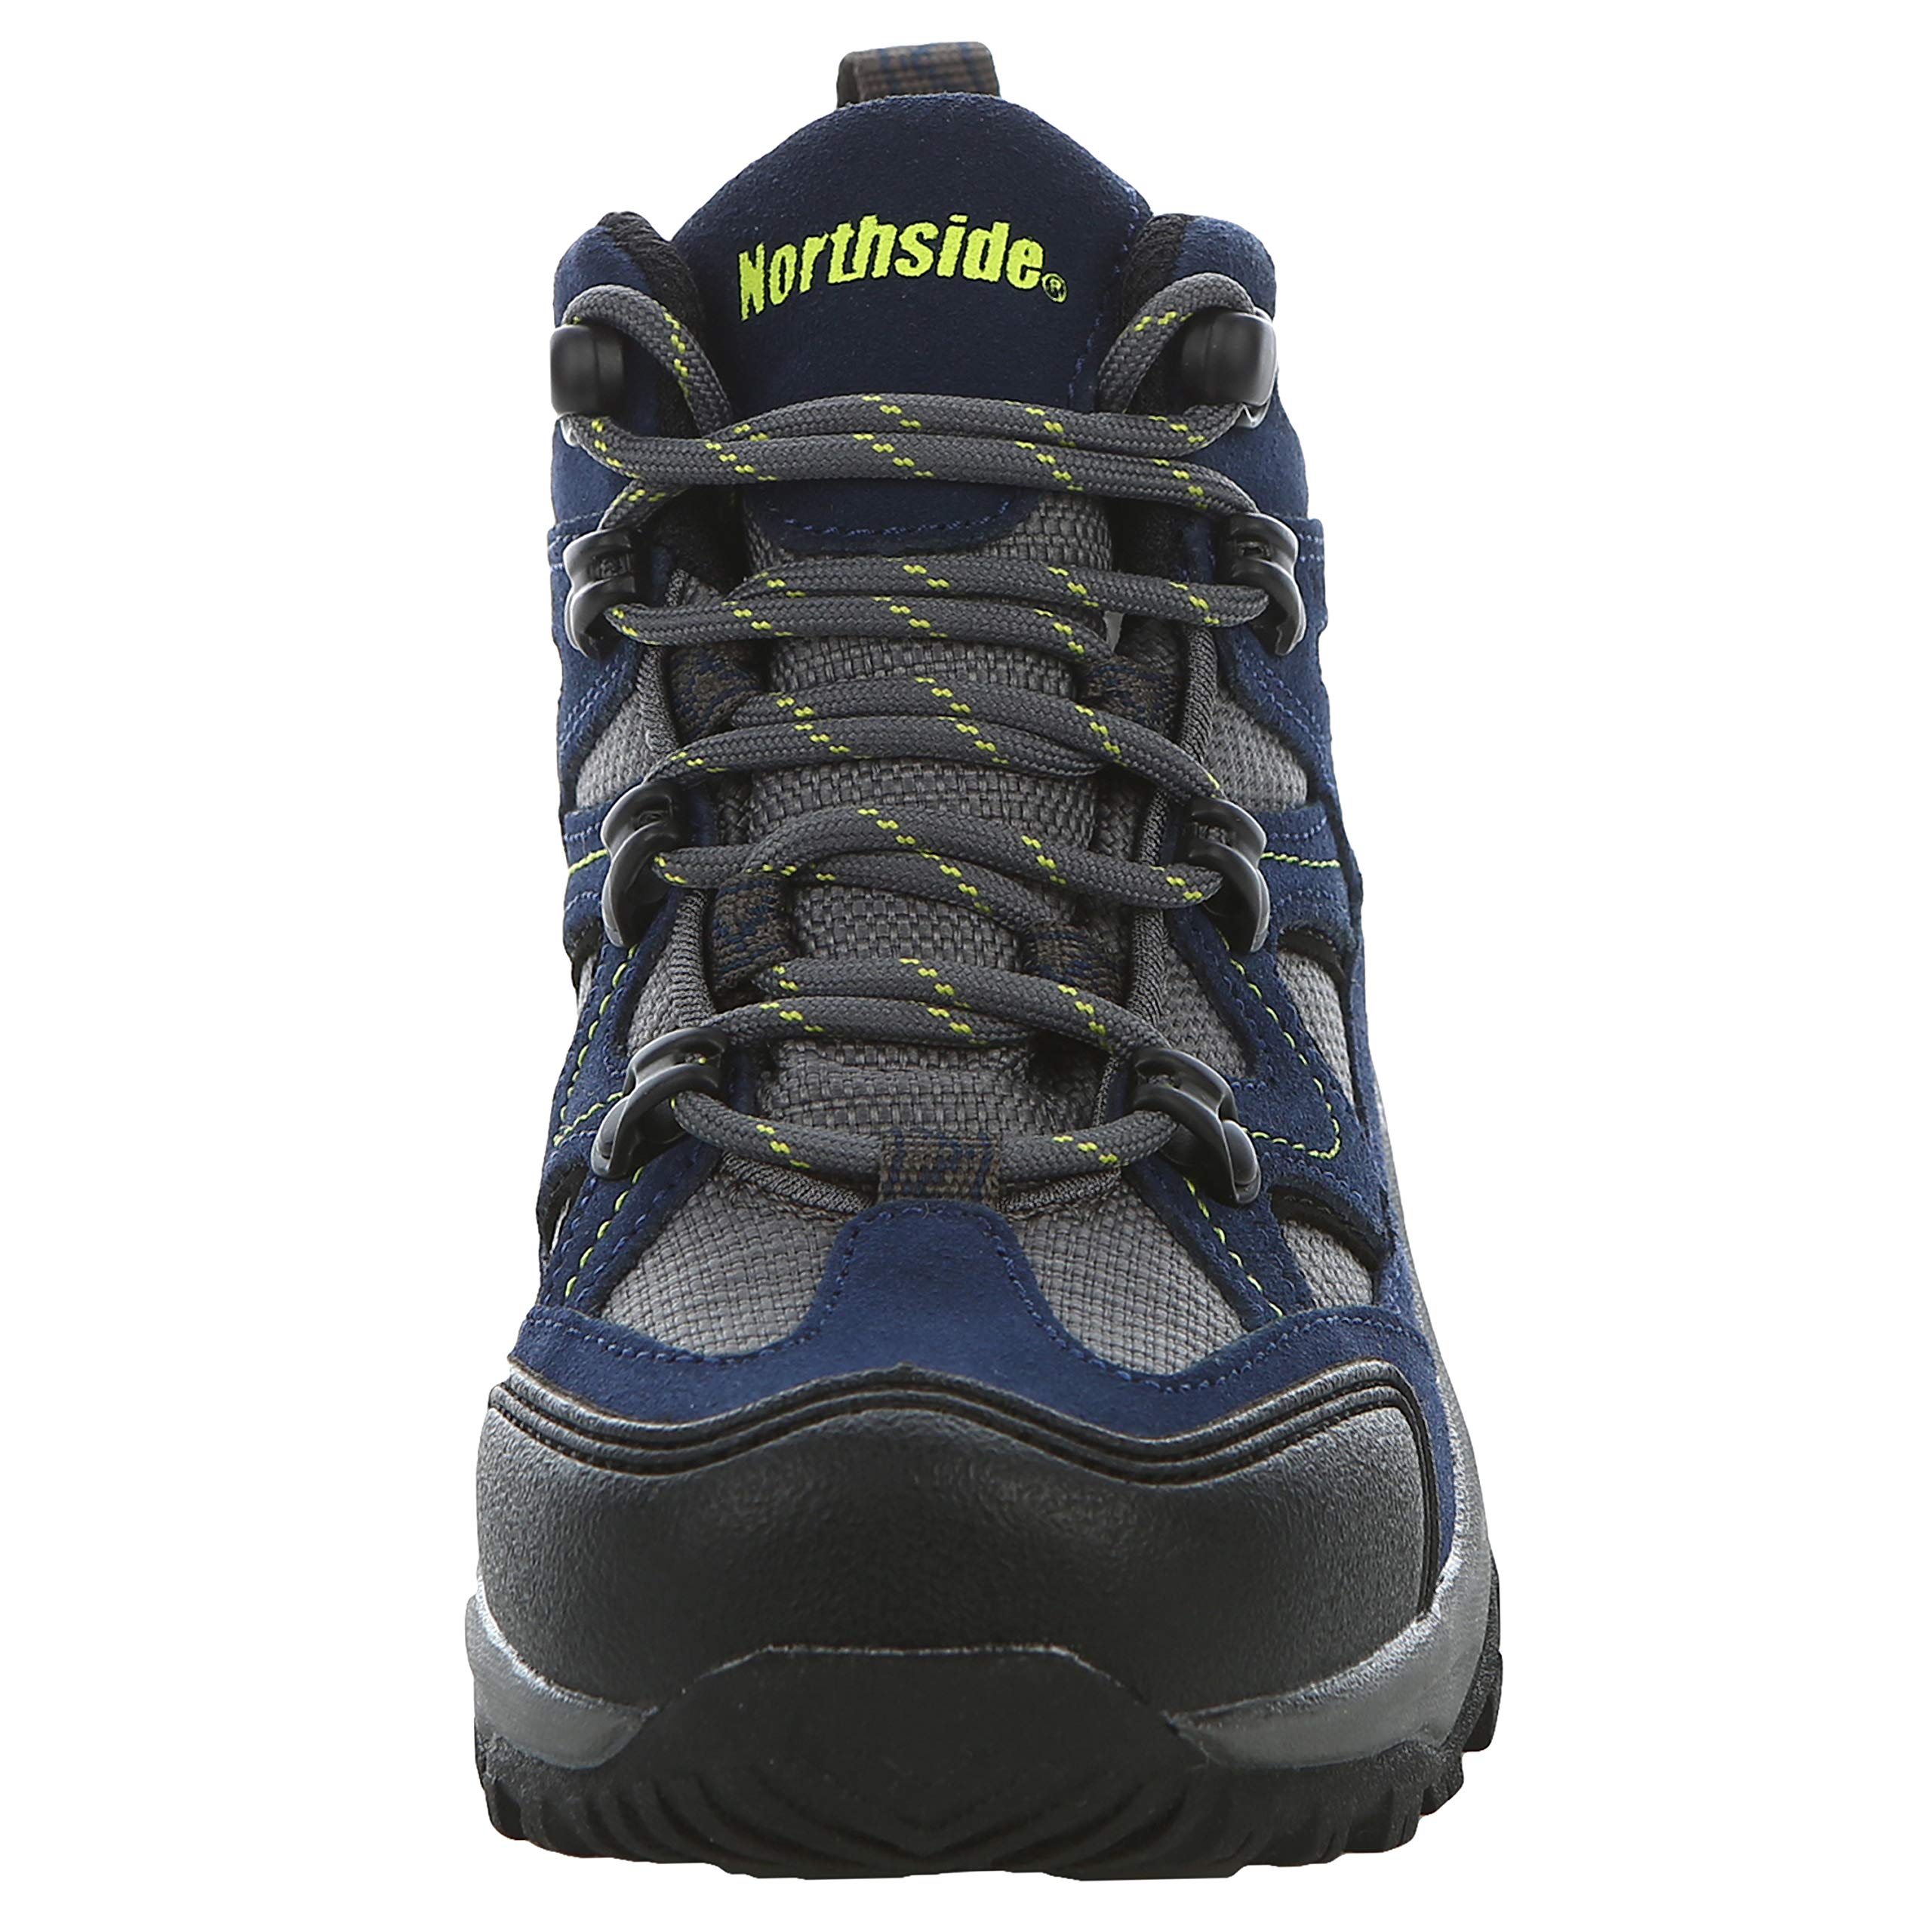 Northside Unisex-Child Snohomish Jr Hiking Boot